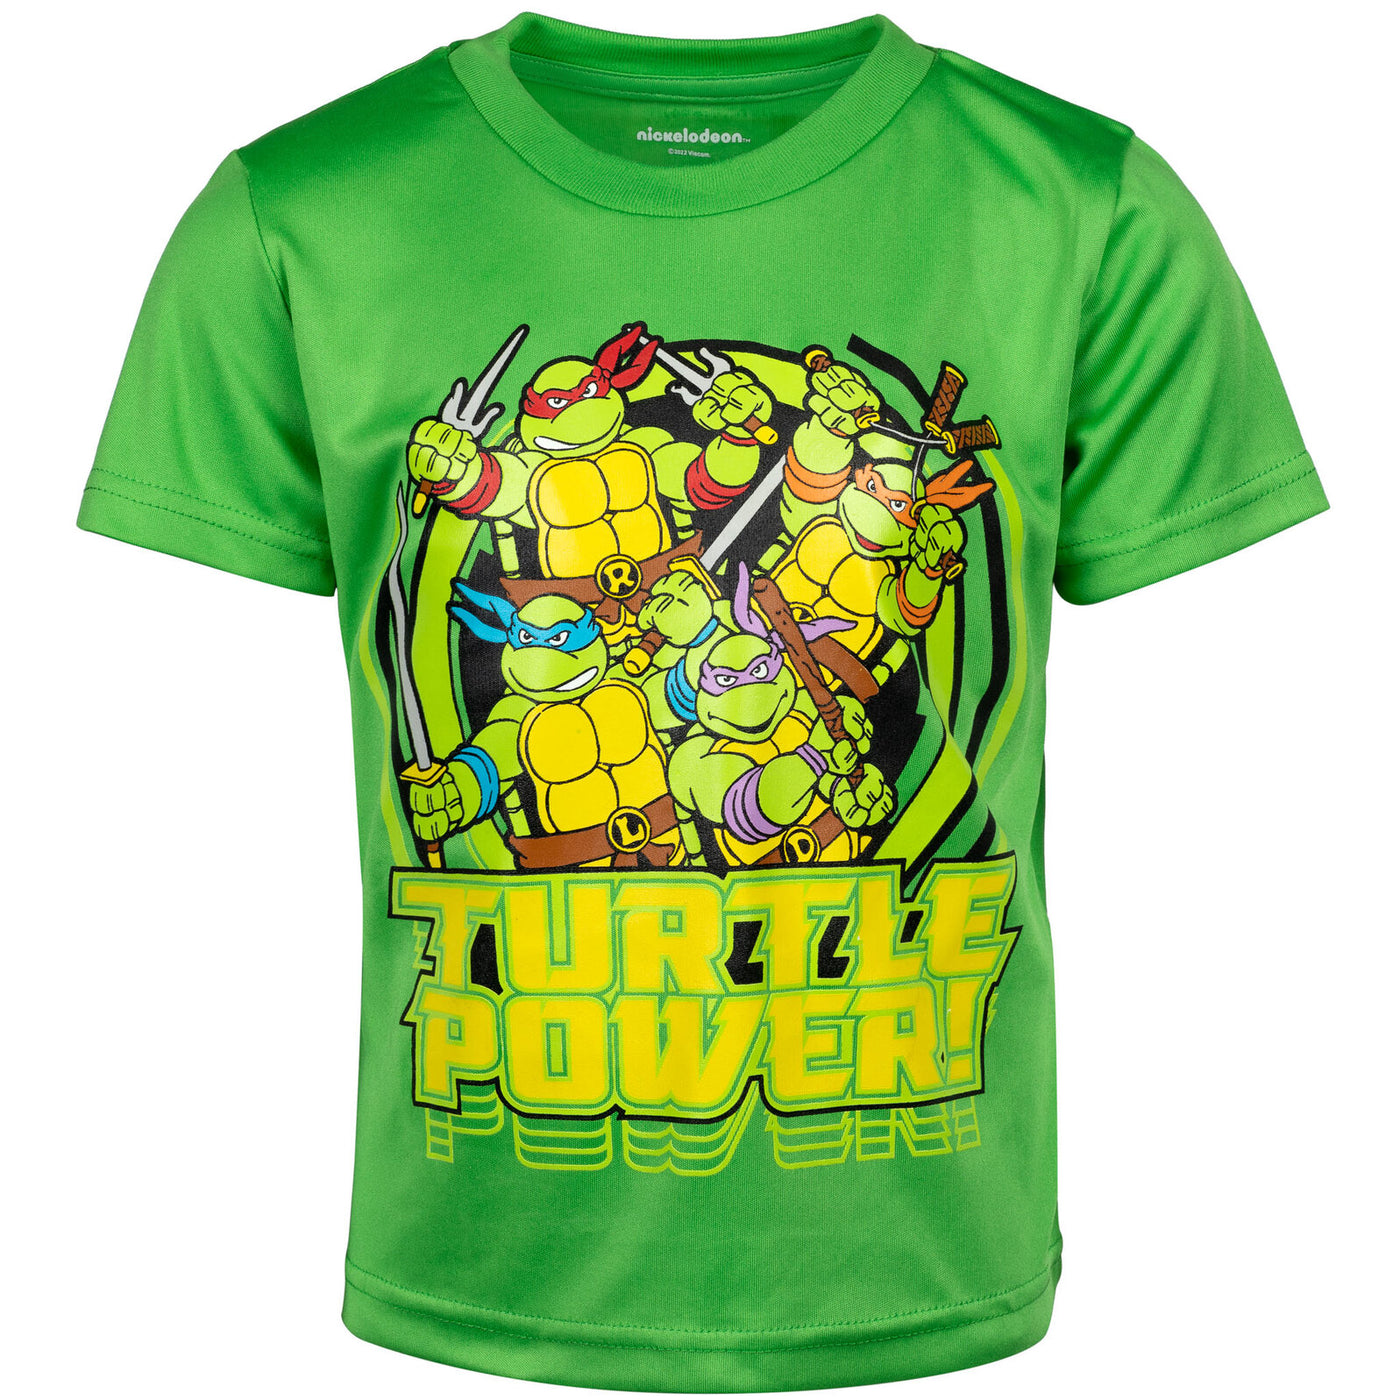 Teenage Mutant Ninja Turtles 3 Pack Graphic T-Shirts